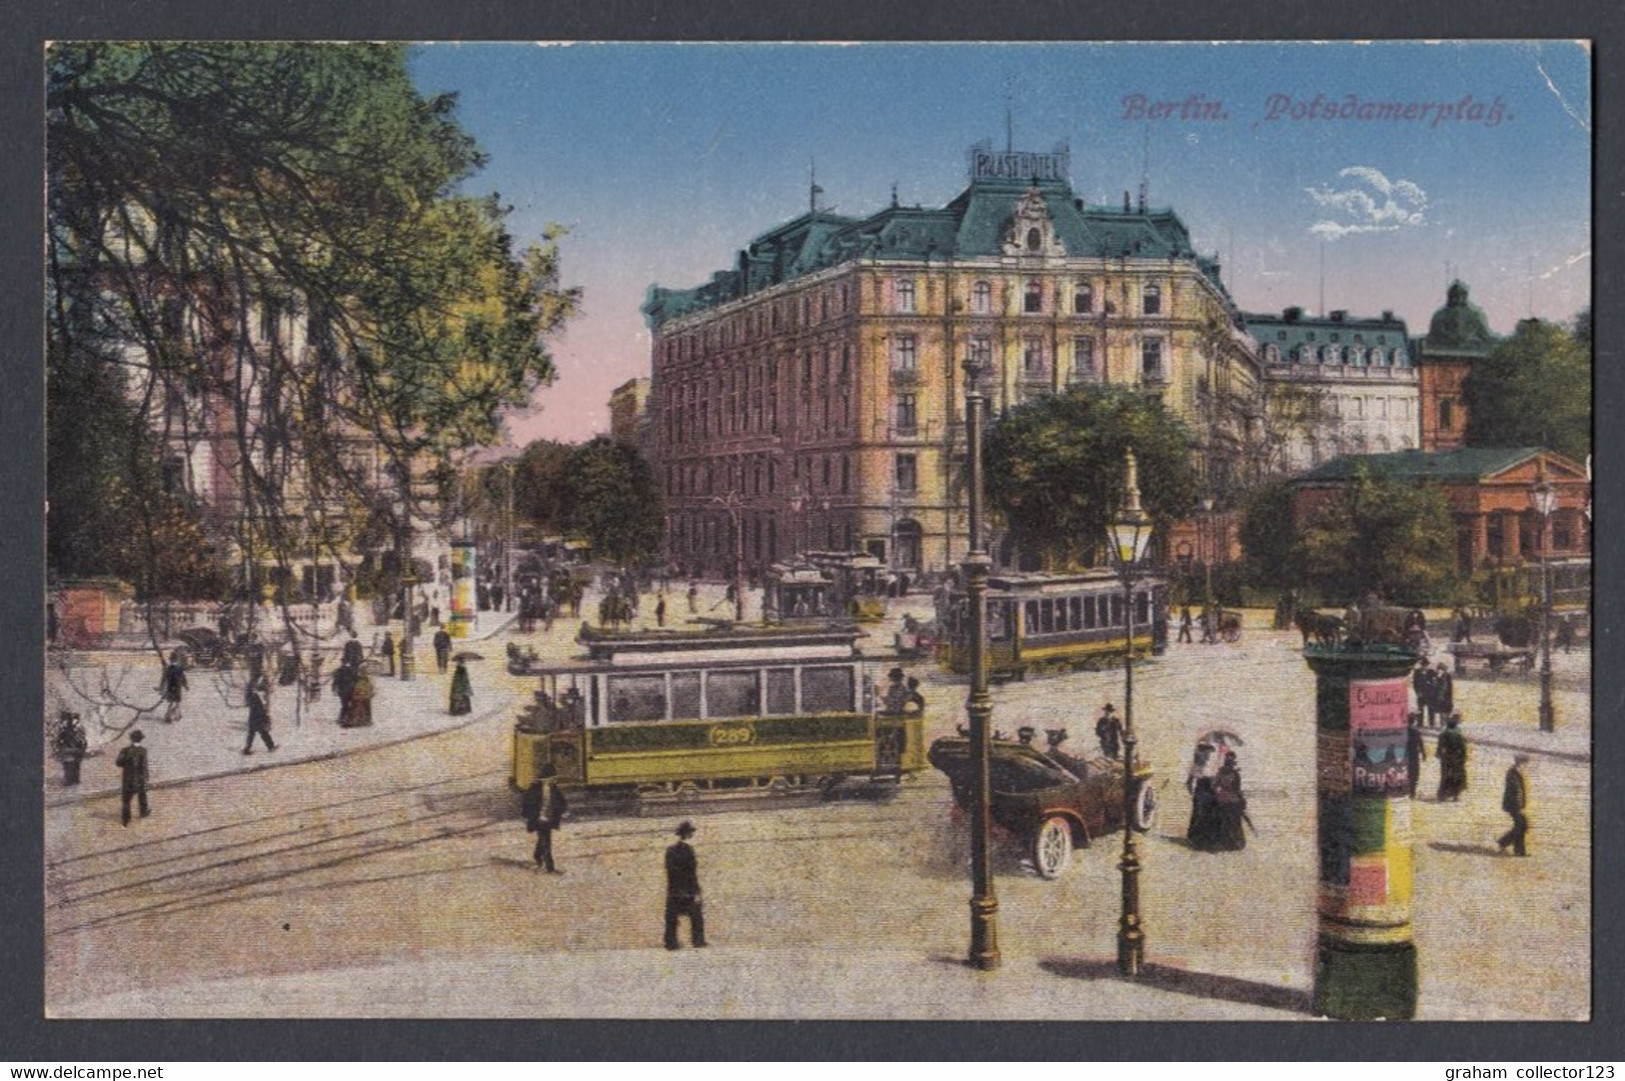 Vintage Printed Postcard Postale Carte Postkarte Berlin Potsdamerpfab Germany Deutsche - Schöneberg